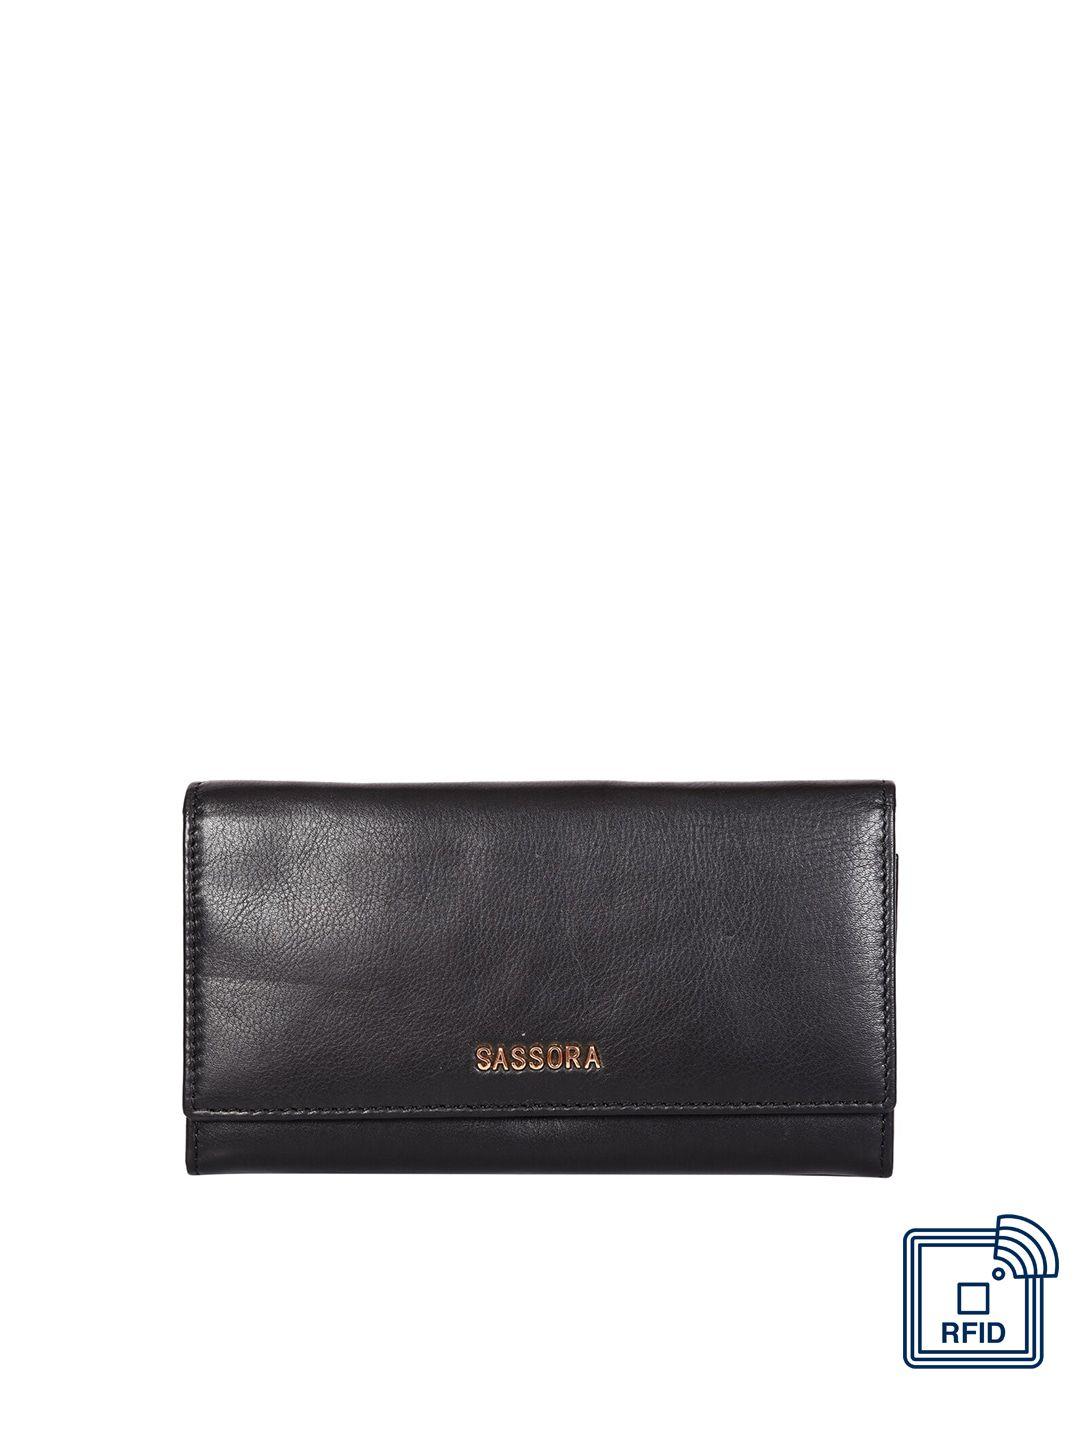 sassora women leather rfid button closure two fold wallet